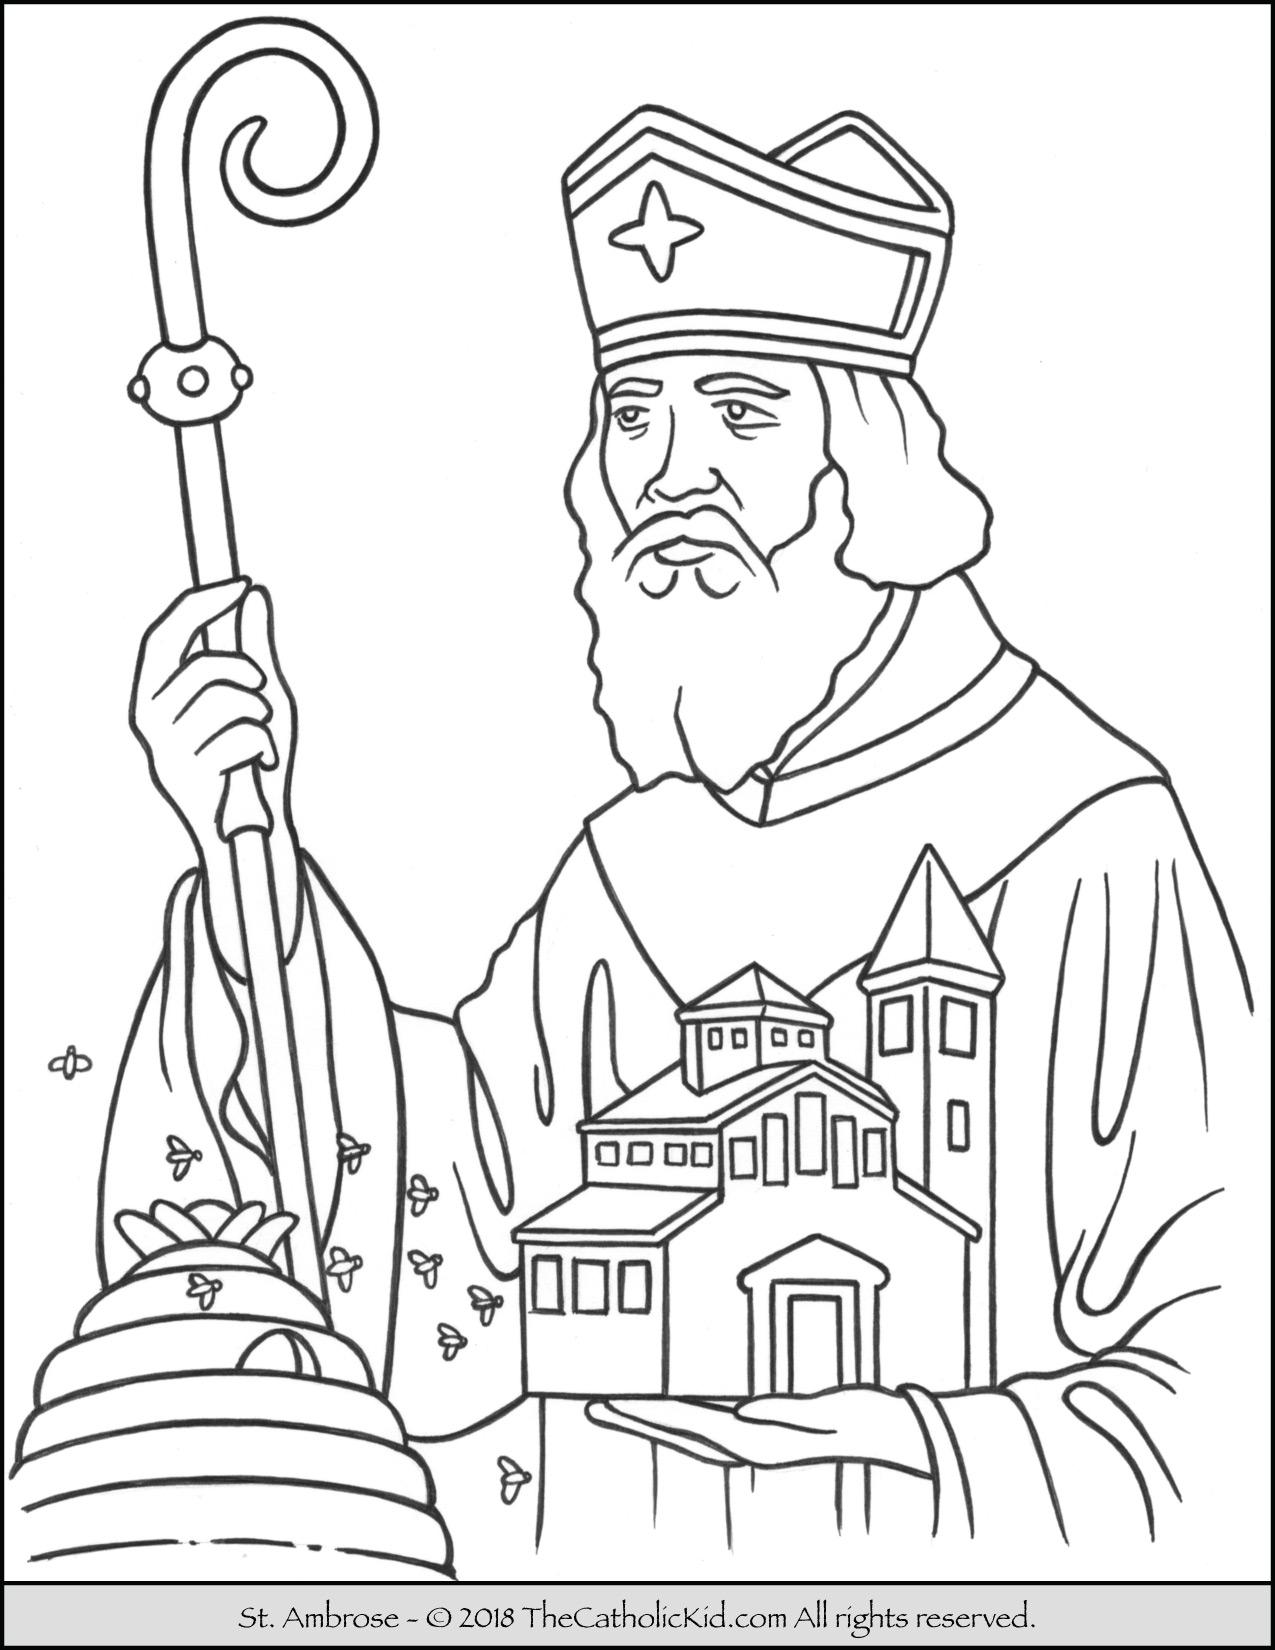 Saint Ambrose Coloring Page - TheCatholicKid.com